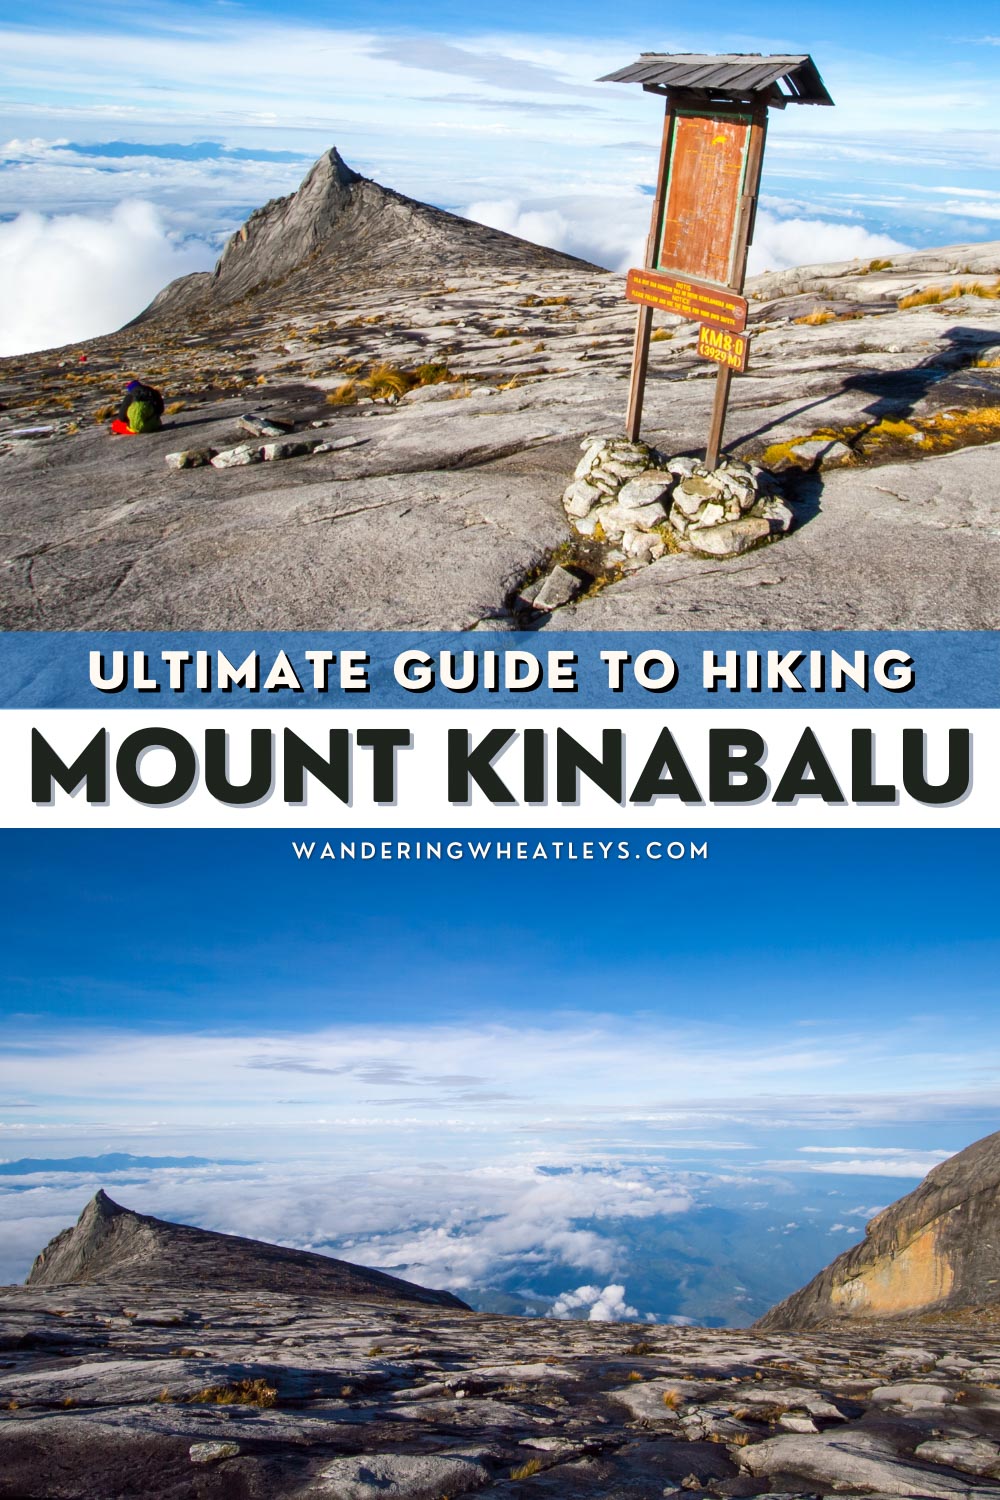 Guide to Hiking Mount Kinabalu